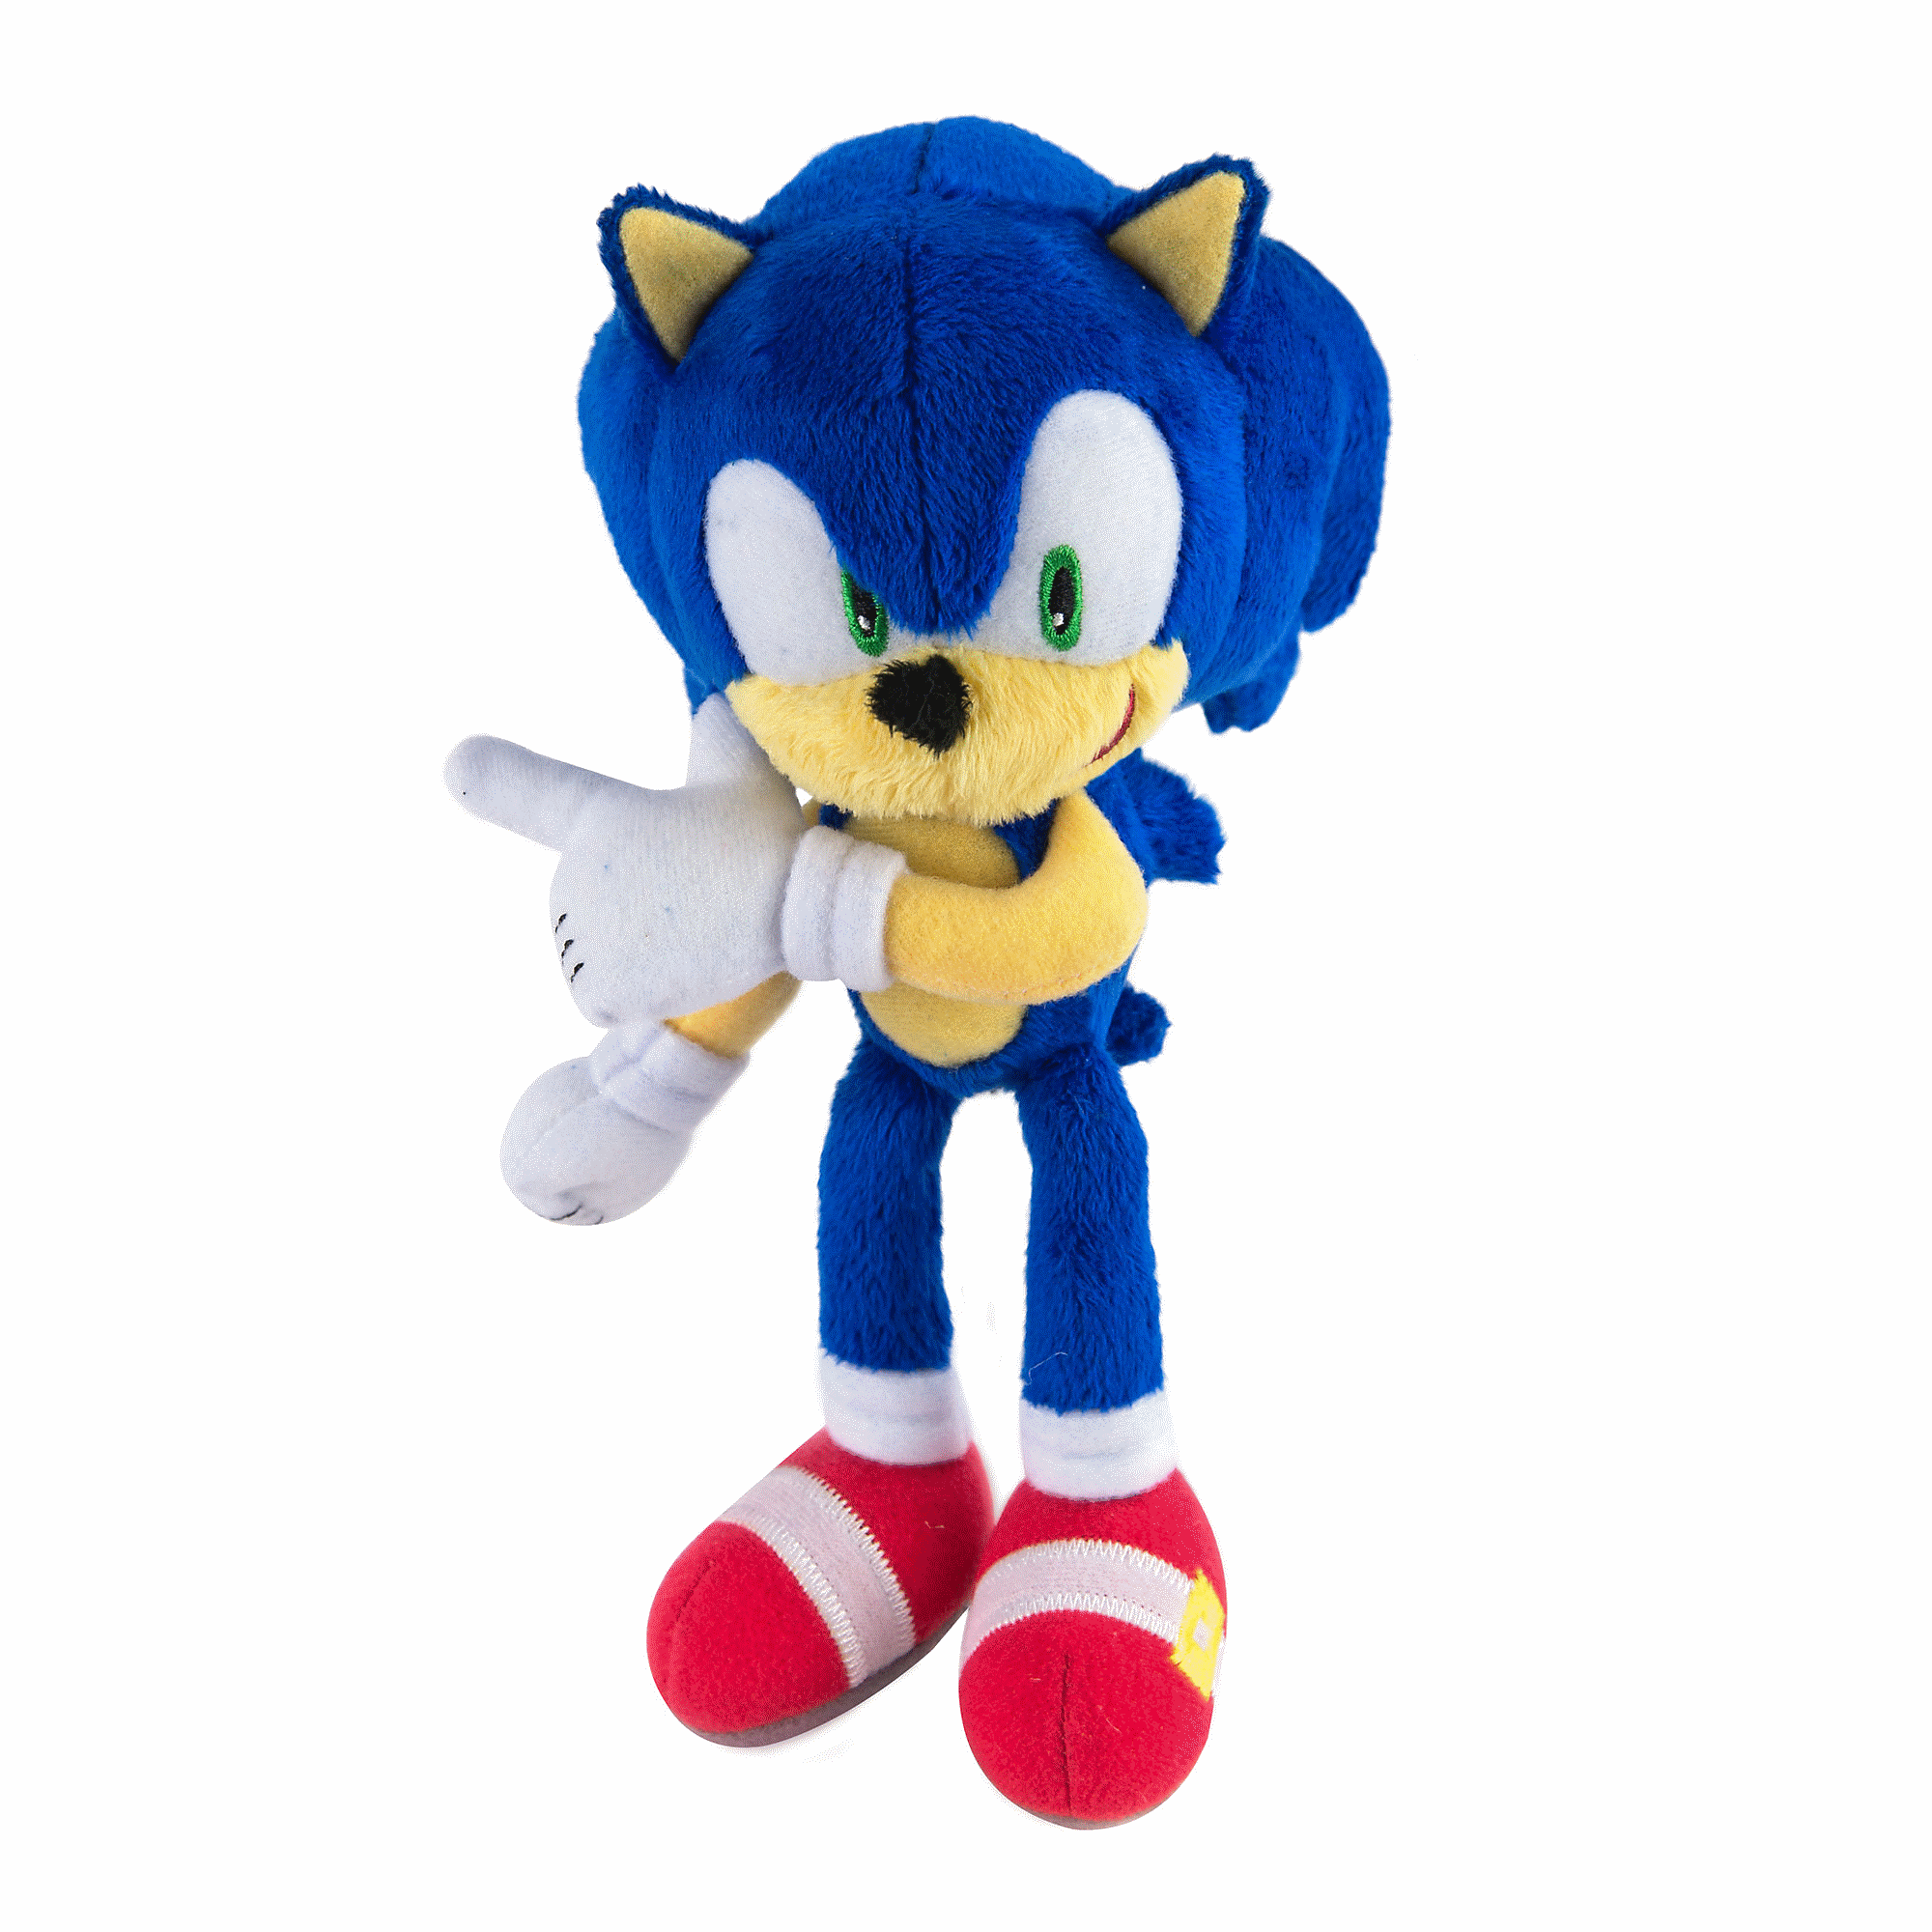 Sonic Tomy Plush. Tomy 12 inch Modern Sonic Plush. Соник Sonic the Hedgehog мягкие игрушки. Игрушки Tomy Tomy Sonic Boom.